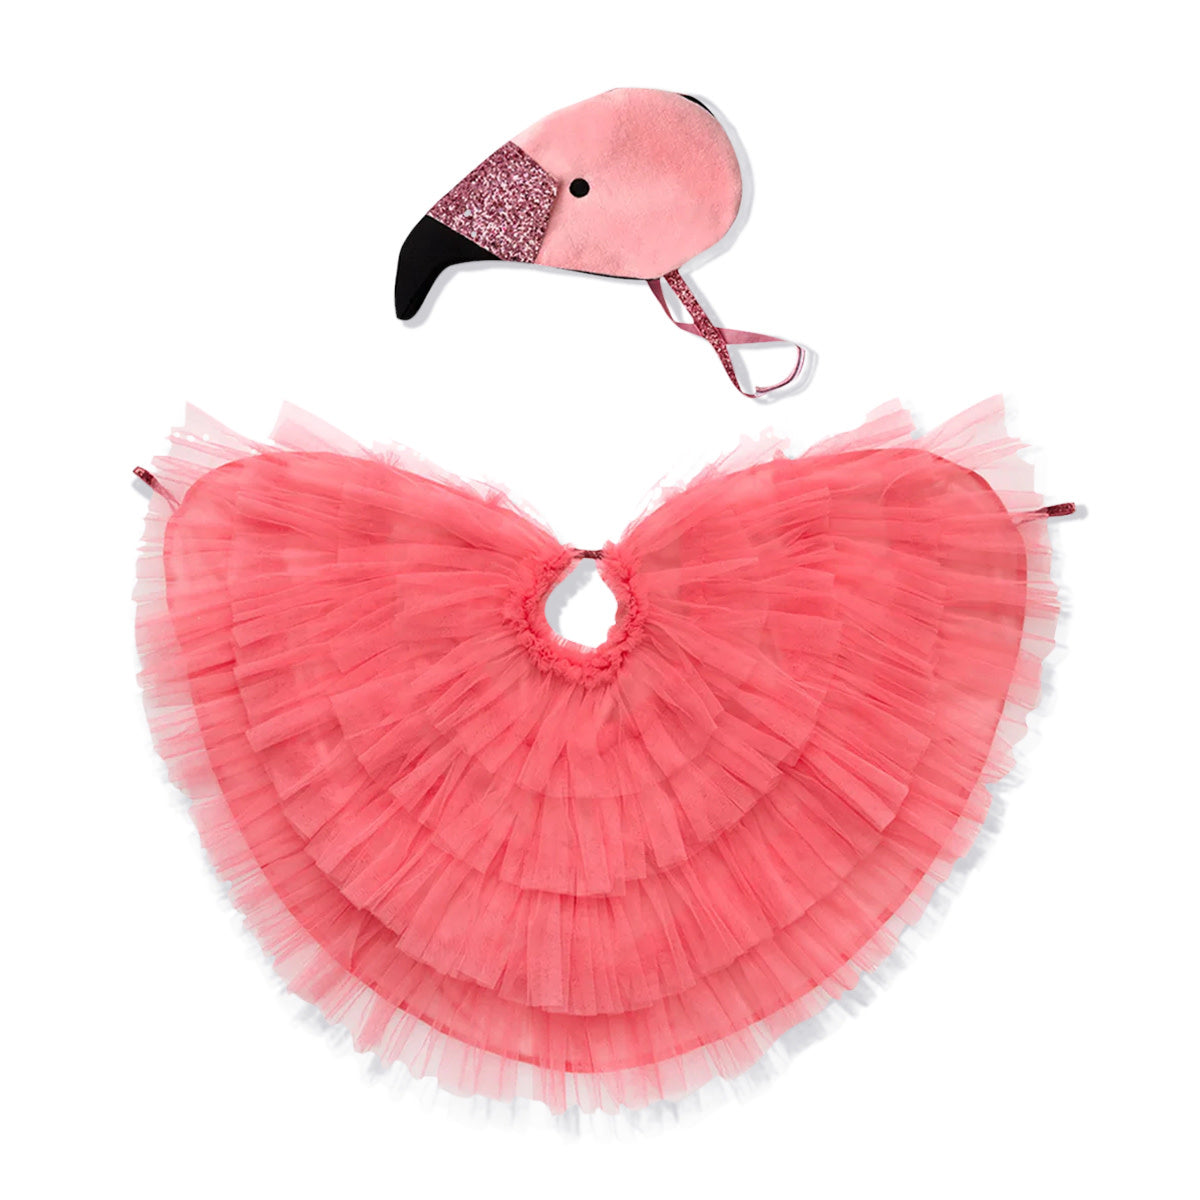 Flamingo Dress Up Kit